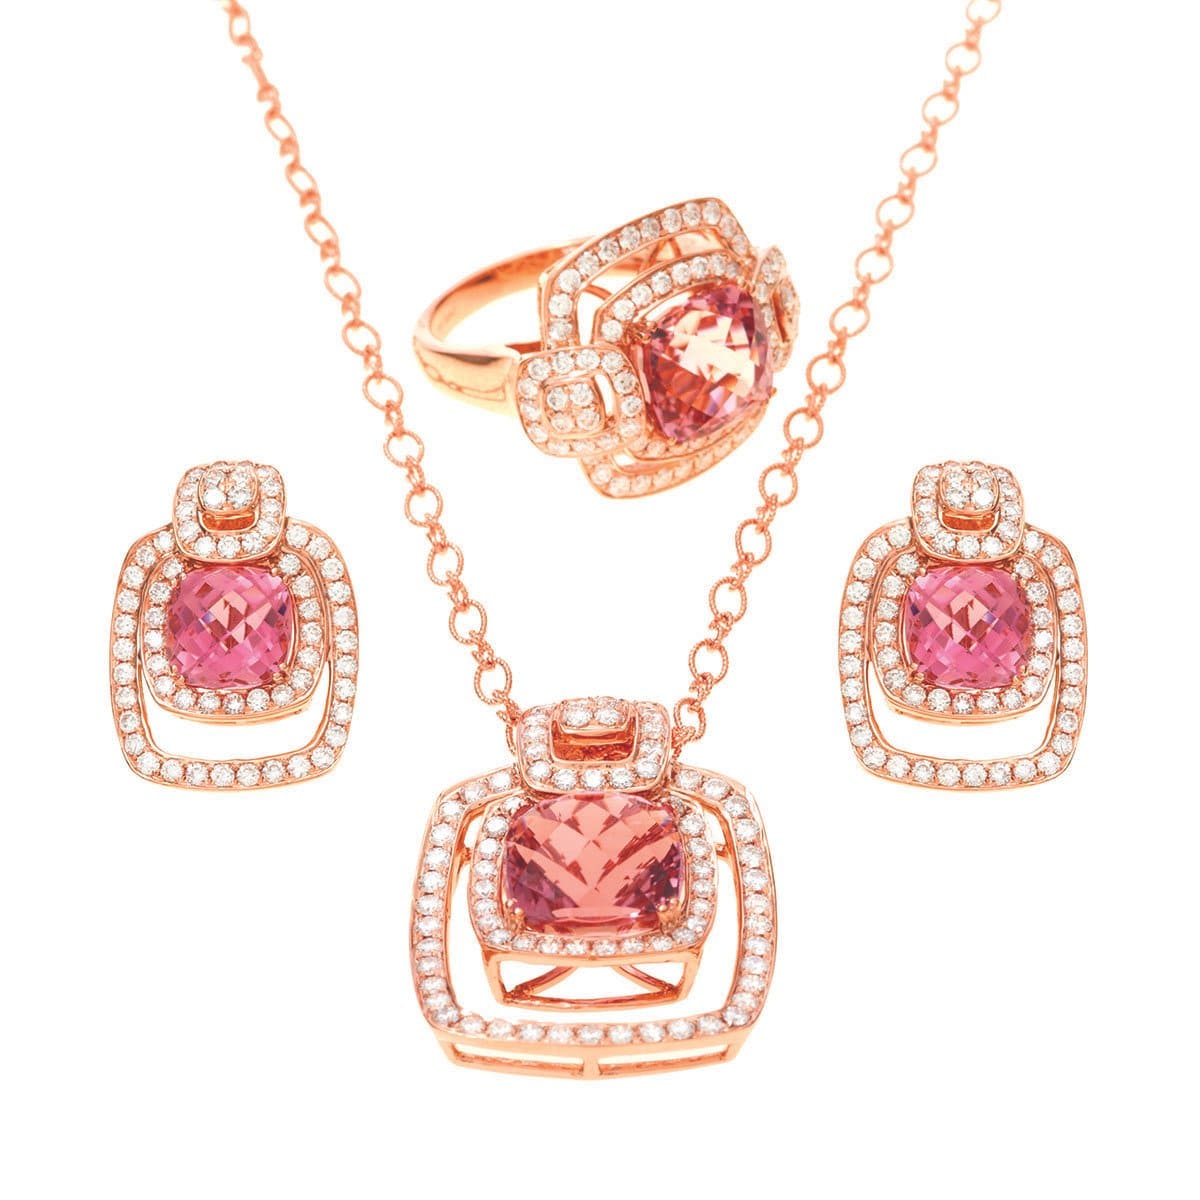 Heiress - 18 Karat Amber Hue Gold, Diamonds and Tourmaline Jewelry Set